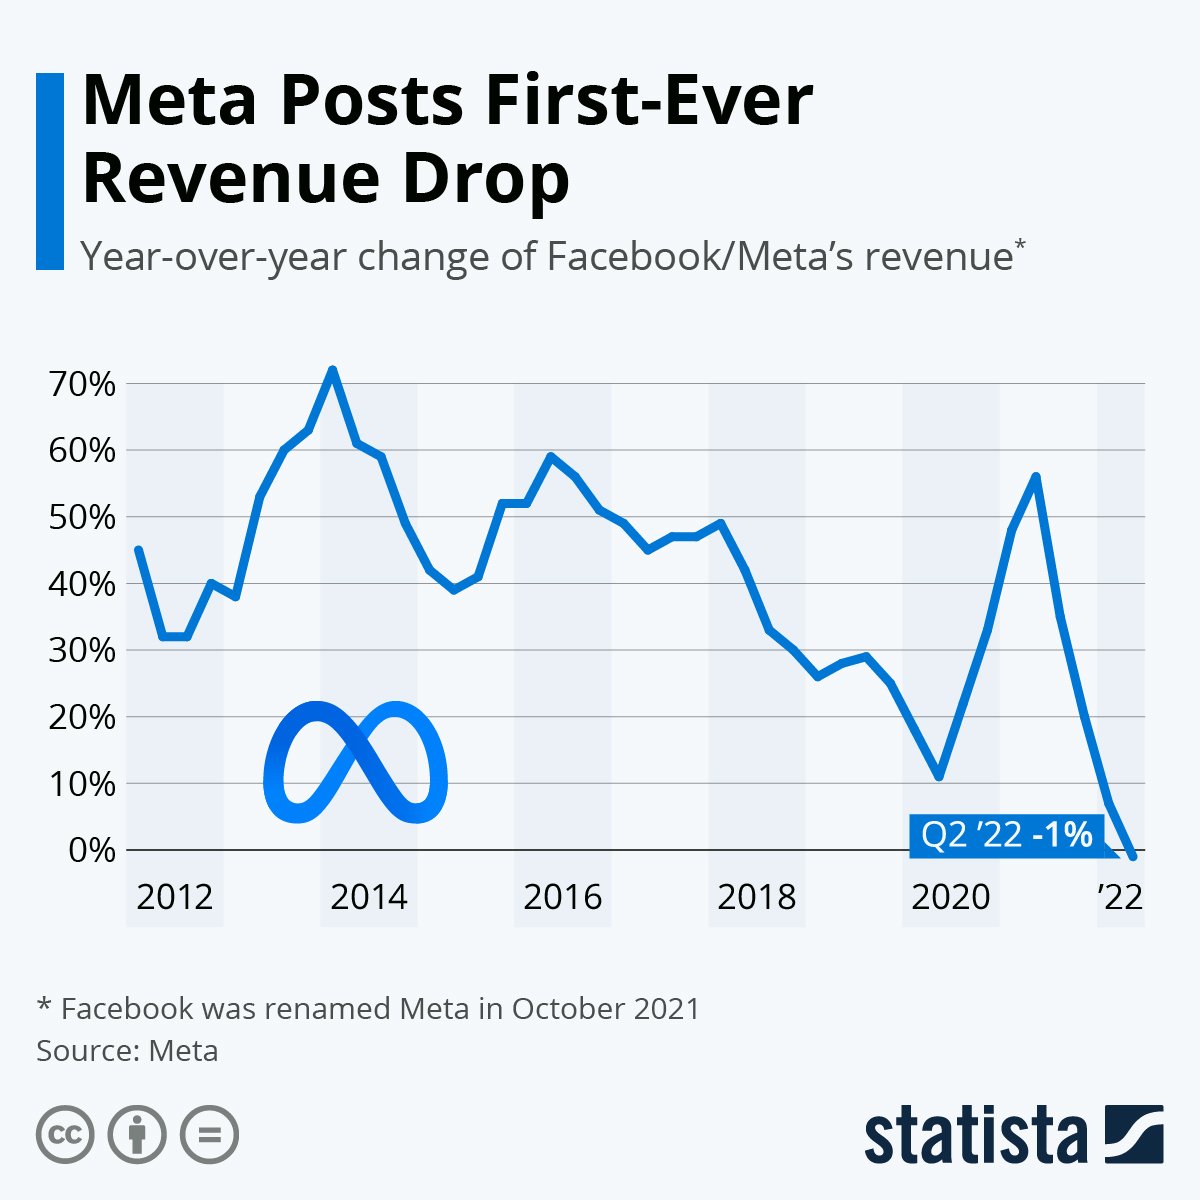 #Meta’s revenue declined by 1% compared to 2021 #marketing #fintech #AI #finserv #Metaverse #NFT @enricomolinari @BrettKing @mi_jim @MarshaCollier @Shirastweet @ParisFinForum @FinMKTG @Julez_Norton @sarbjeetjohal @bworden @DrJDrooghaag @TamaraMcCleary @stratorob @JolaBurnett